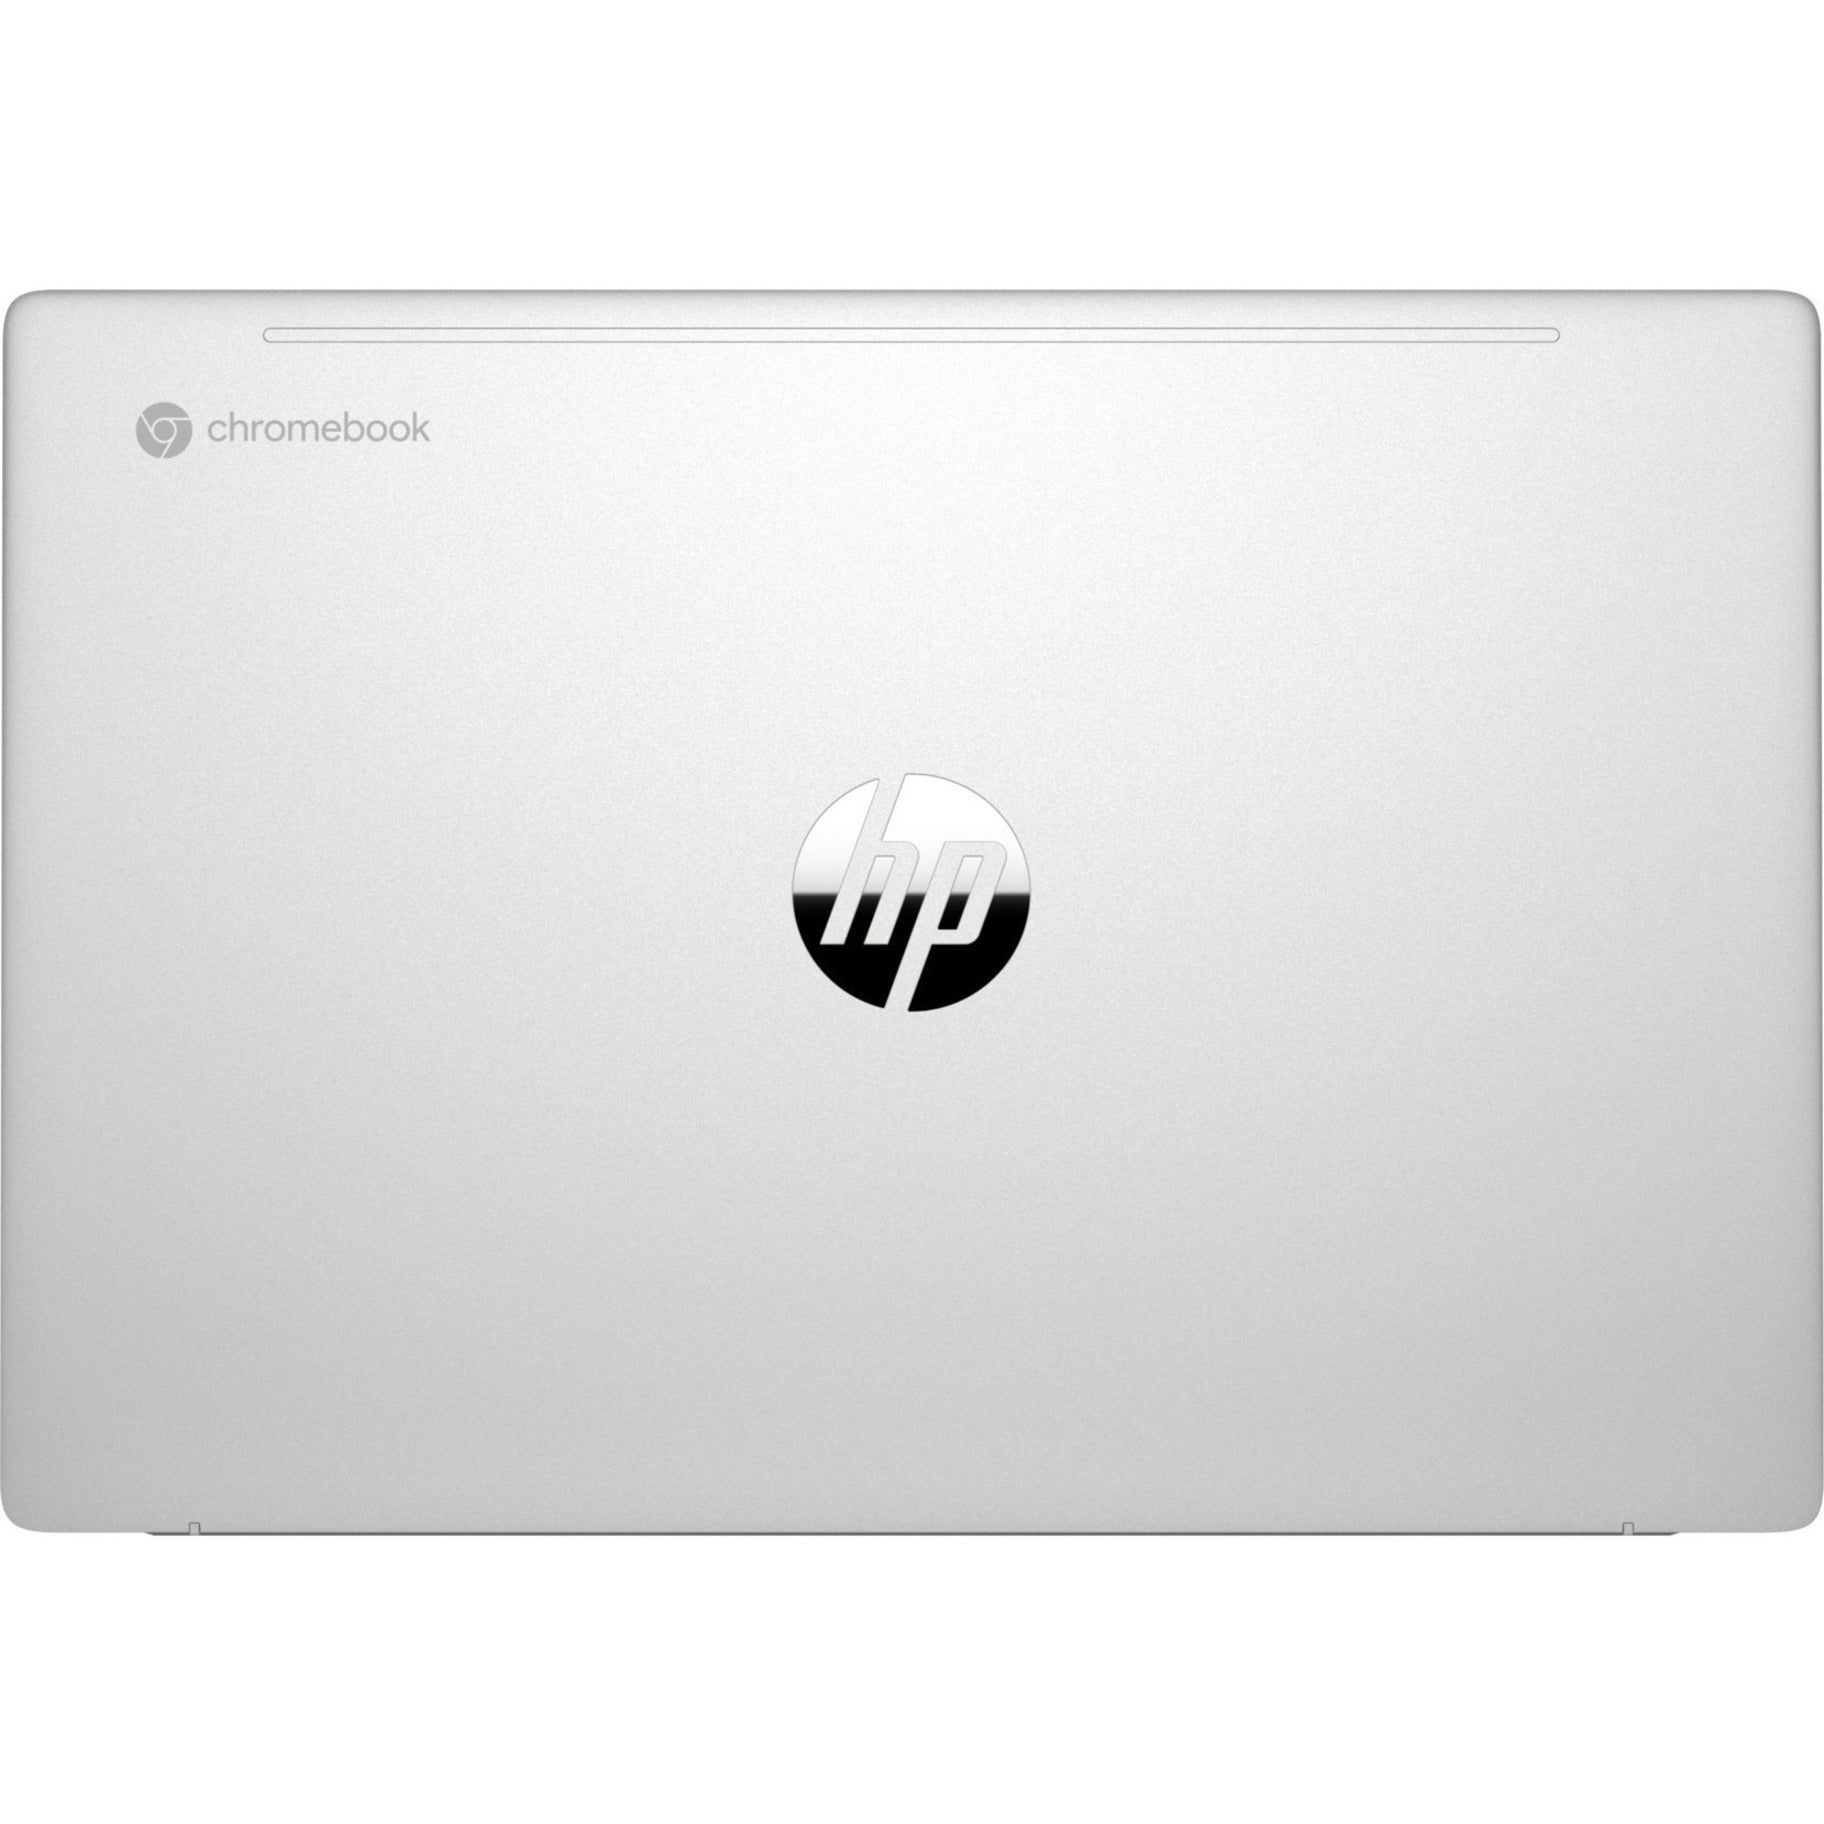 HP Pro c640 G2 Chromebook, 14", Core i7, 16GB RAM, 128GB SSD, ChromeOS